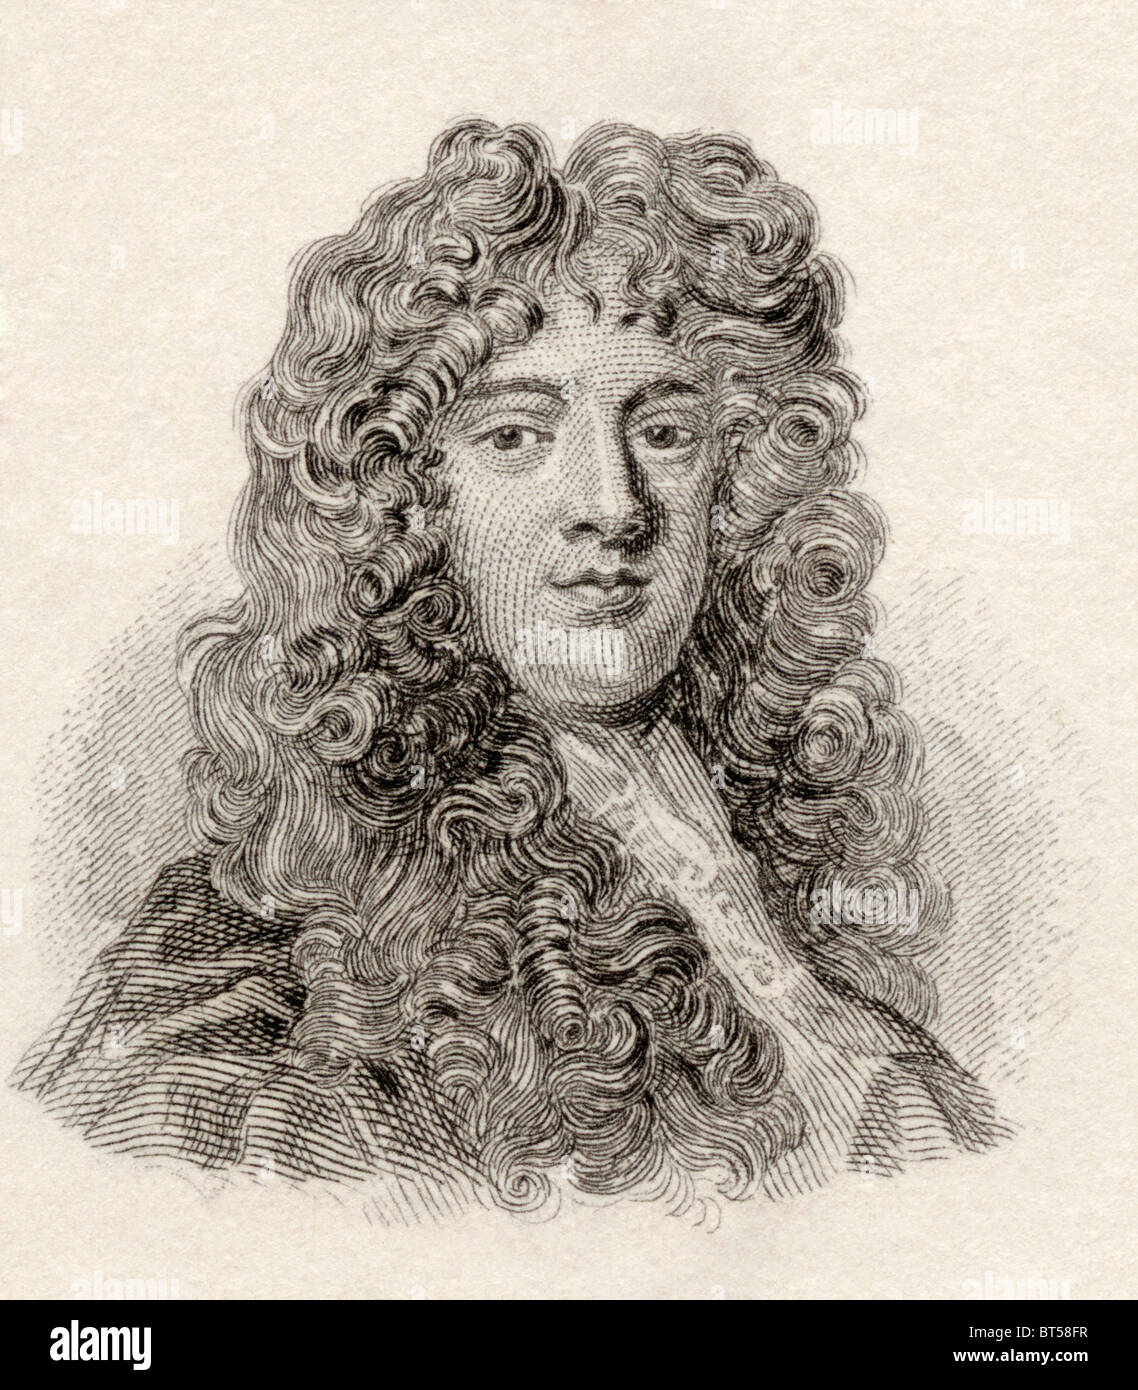 William Wycherley, c. 1640 to 1715. English dramatist of the Restoration period. Stock Photo